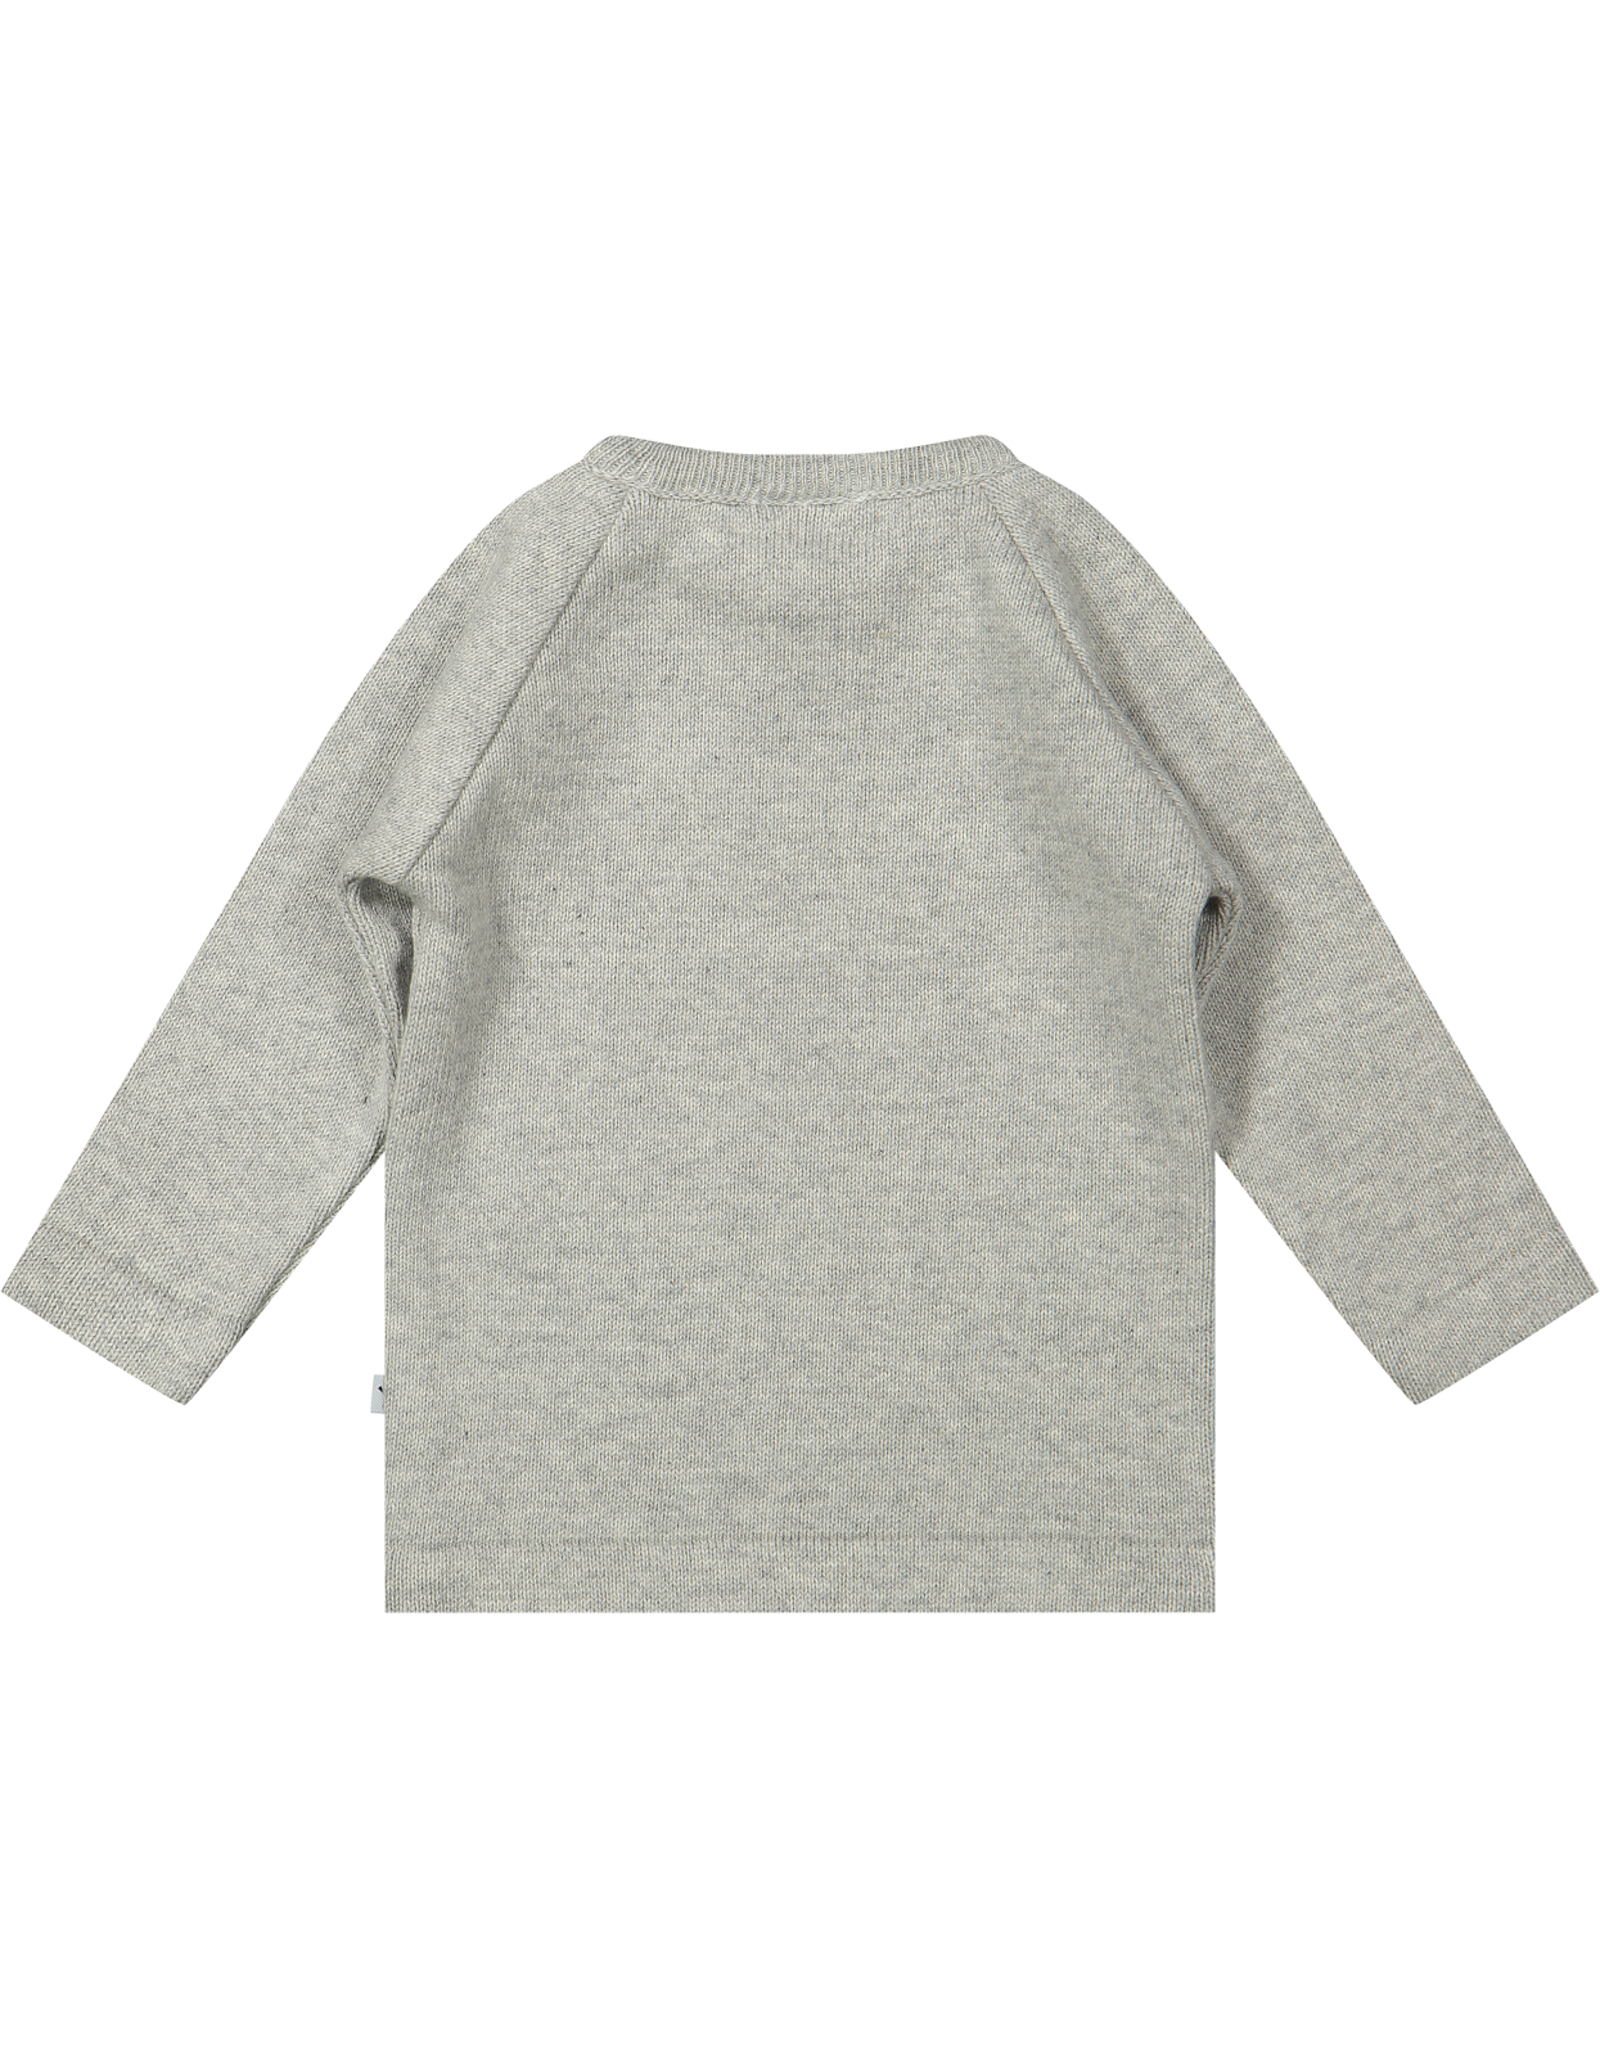 Klein Shirt Grey Melange NOS